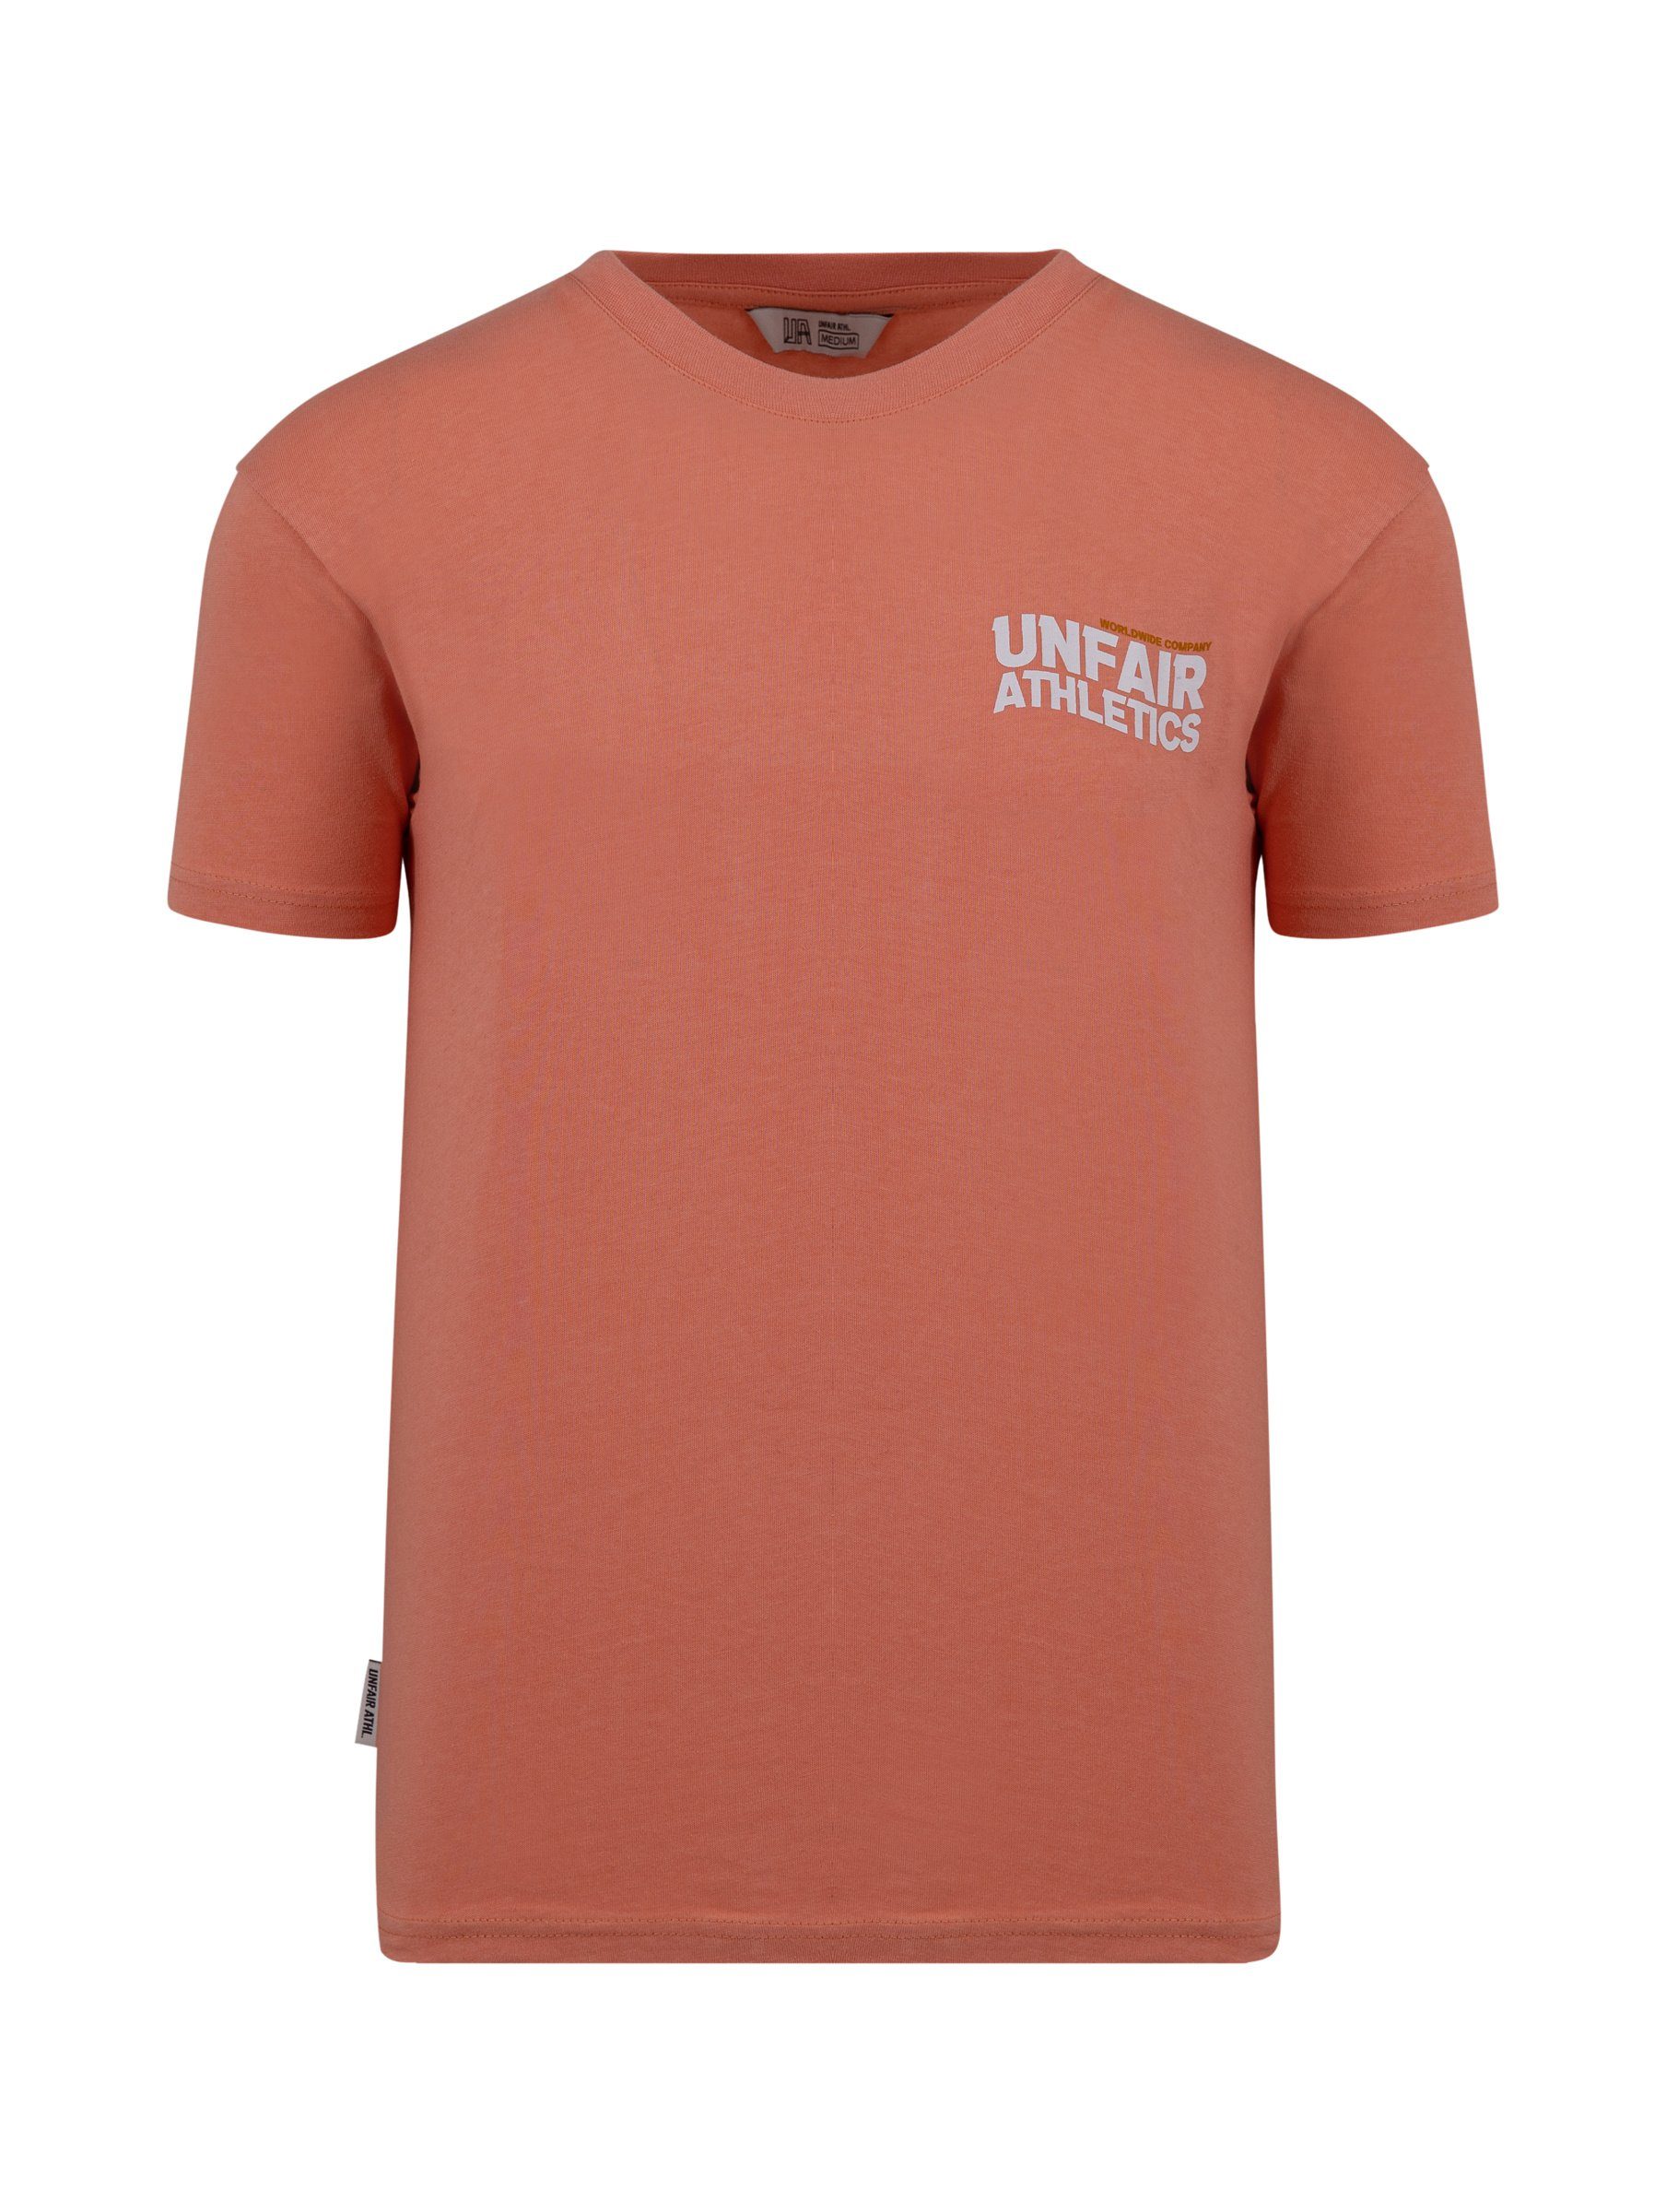 Network T-Shirt Athletics Adult Unfair orange T-Shirt Unfair Subculture Athletics Herren